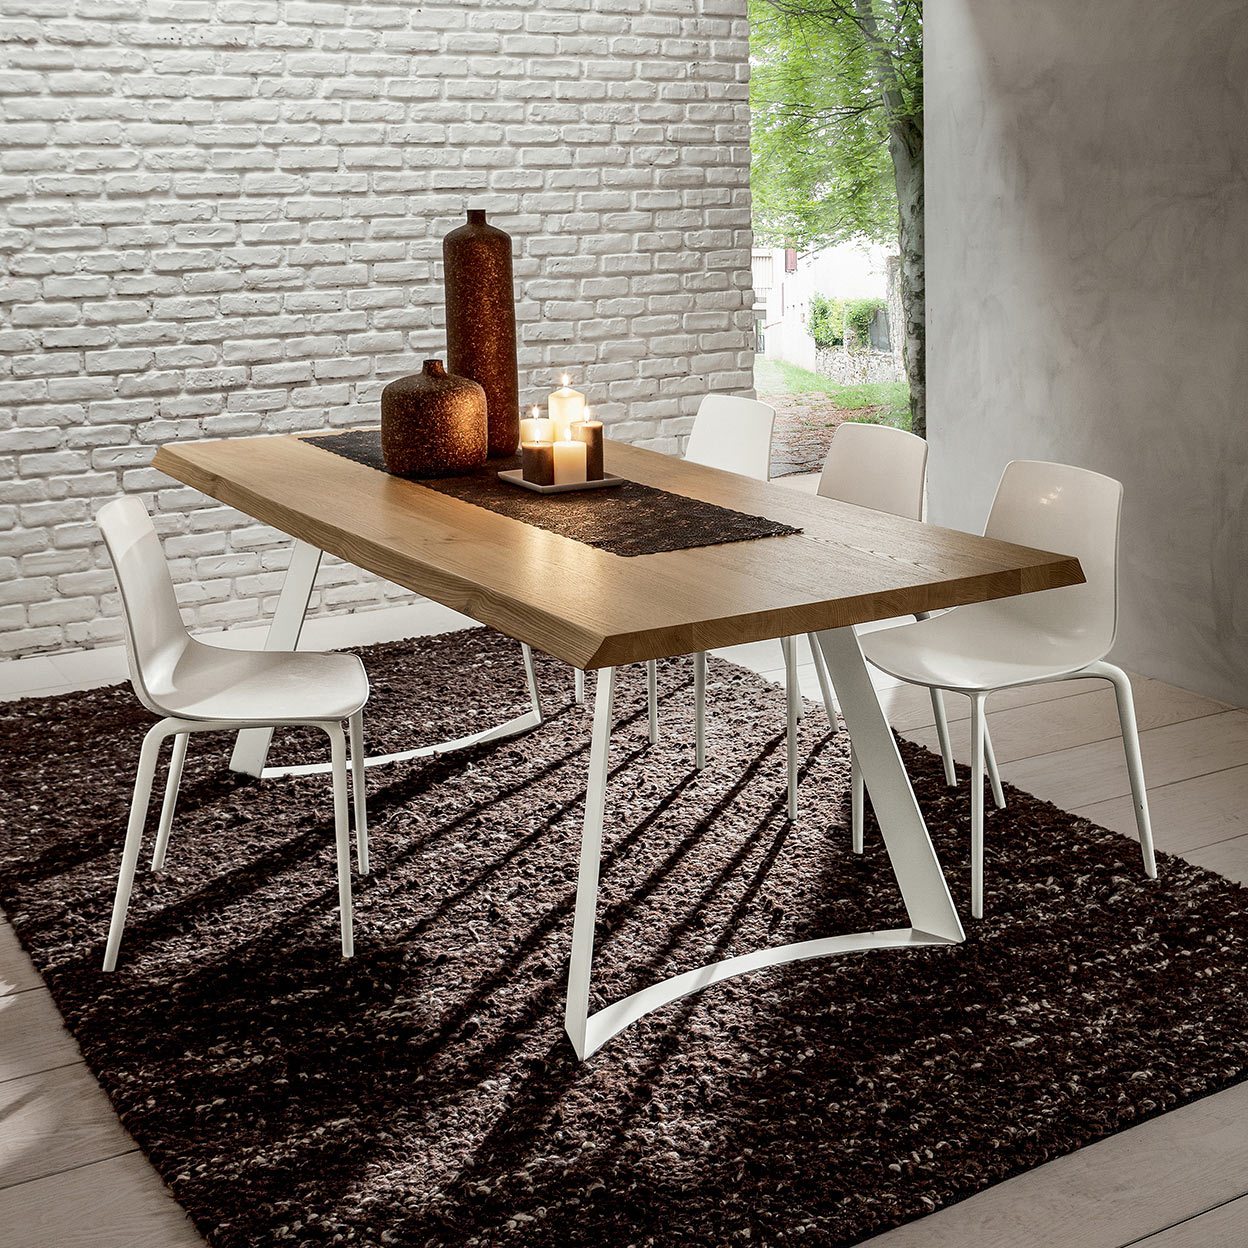 Bruno fixed dining table by La Primavera - myitalianliving